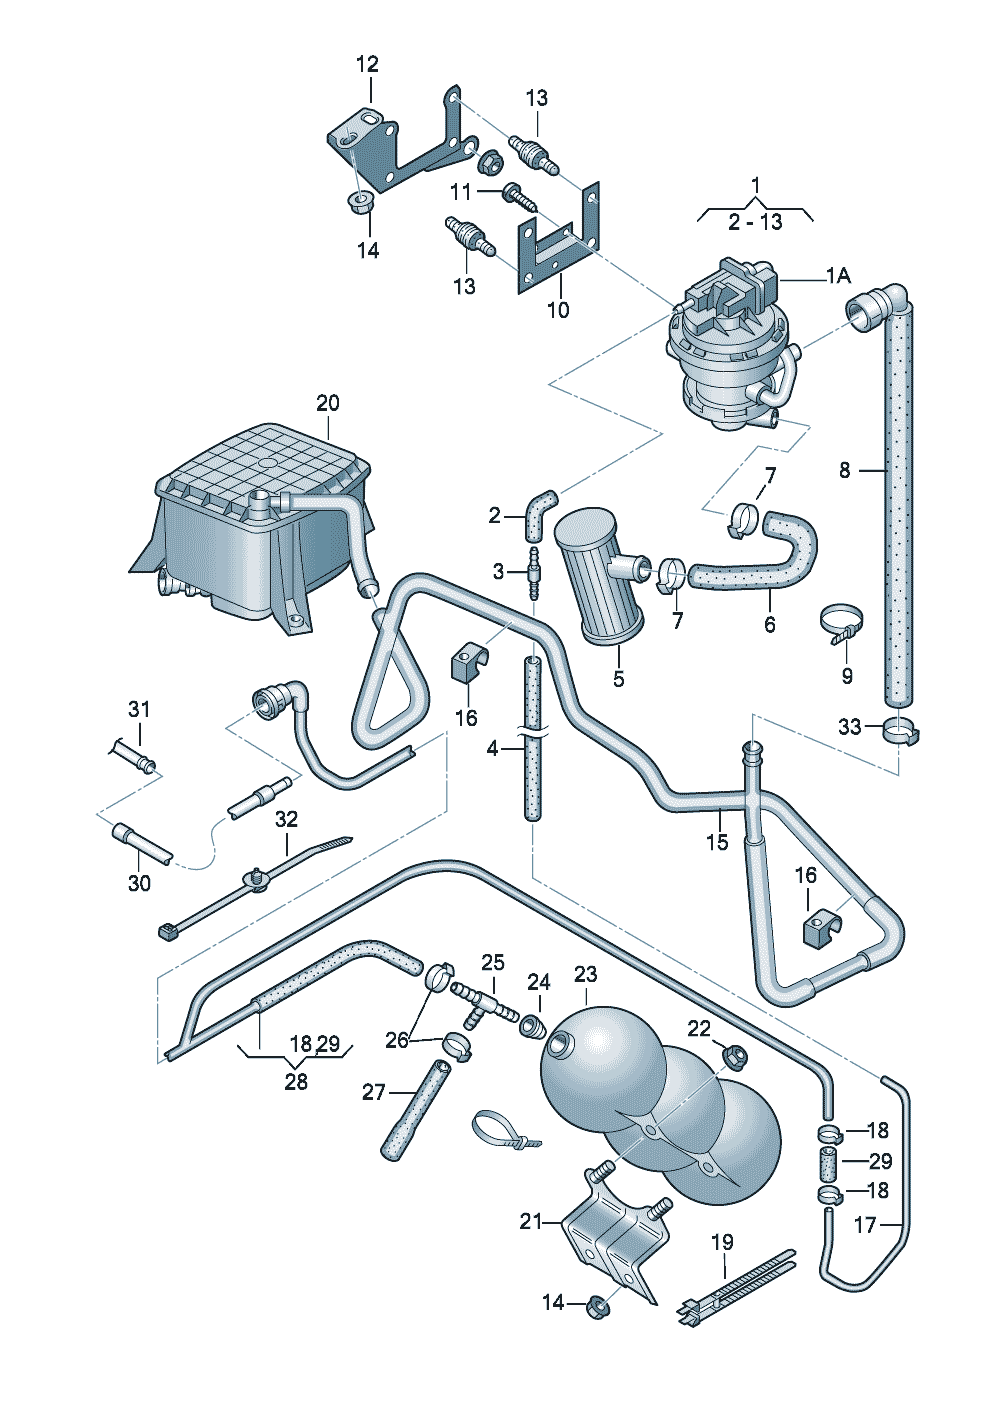 diagnosis pump for fuel<br>system 4.2 Ltr. - Audi A4/S4/Avant - a4q